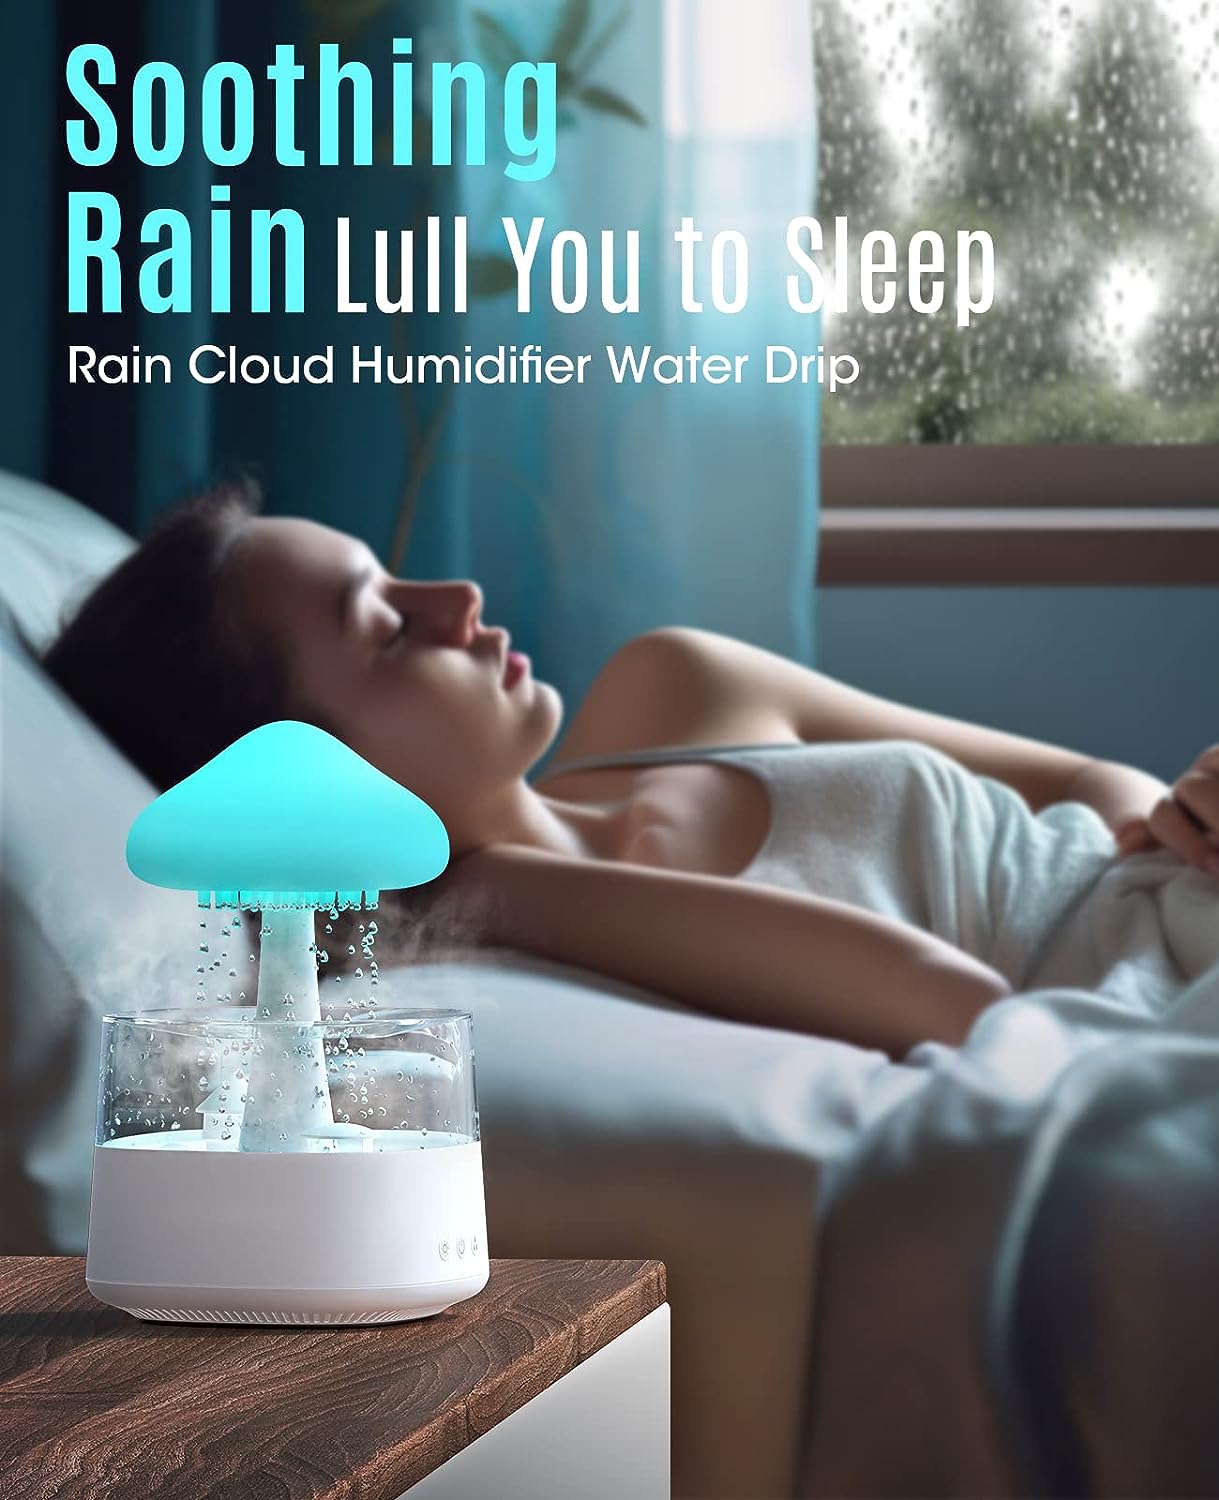 Urbantrunk Rain Cloud Humidifier by Artment